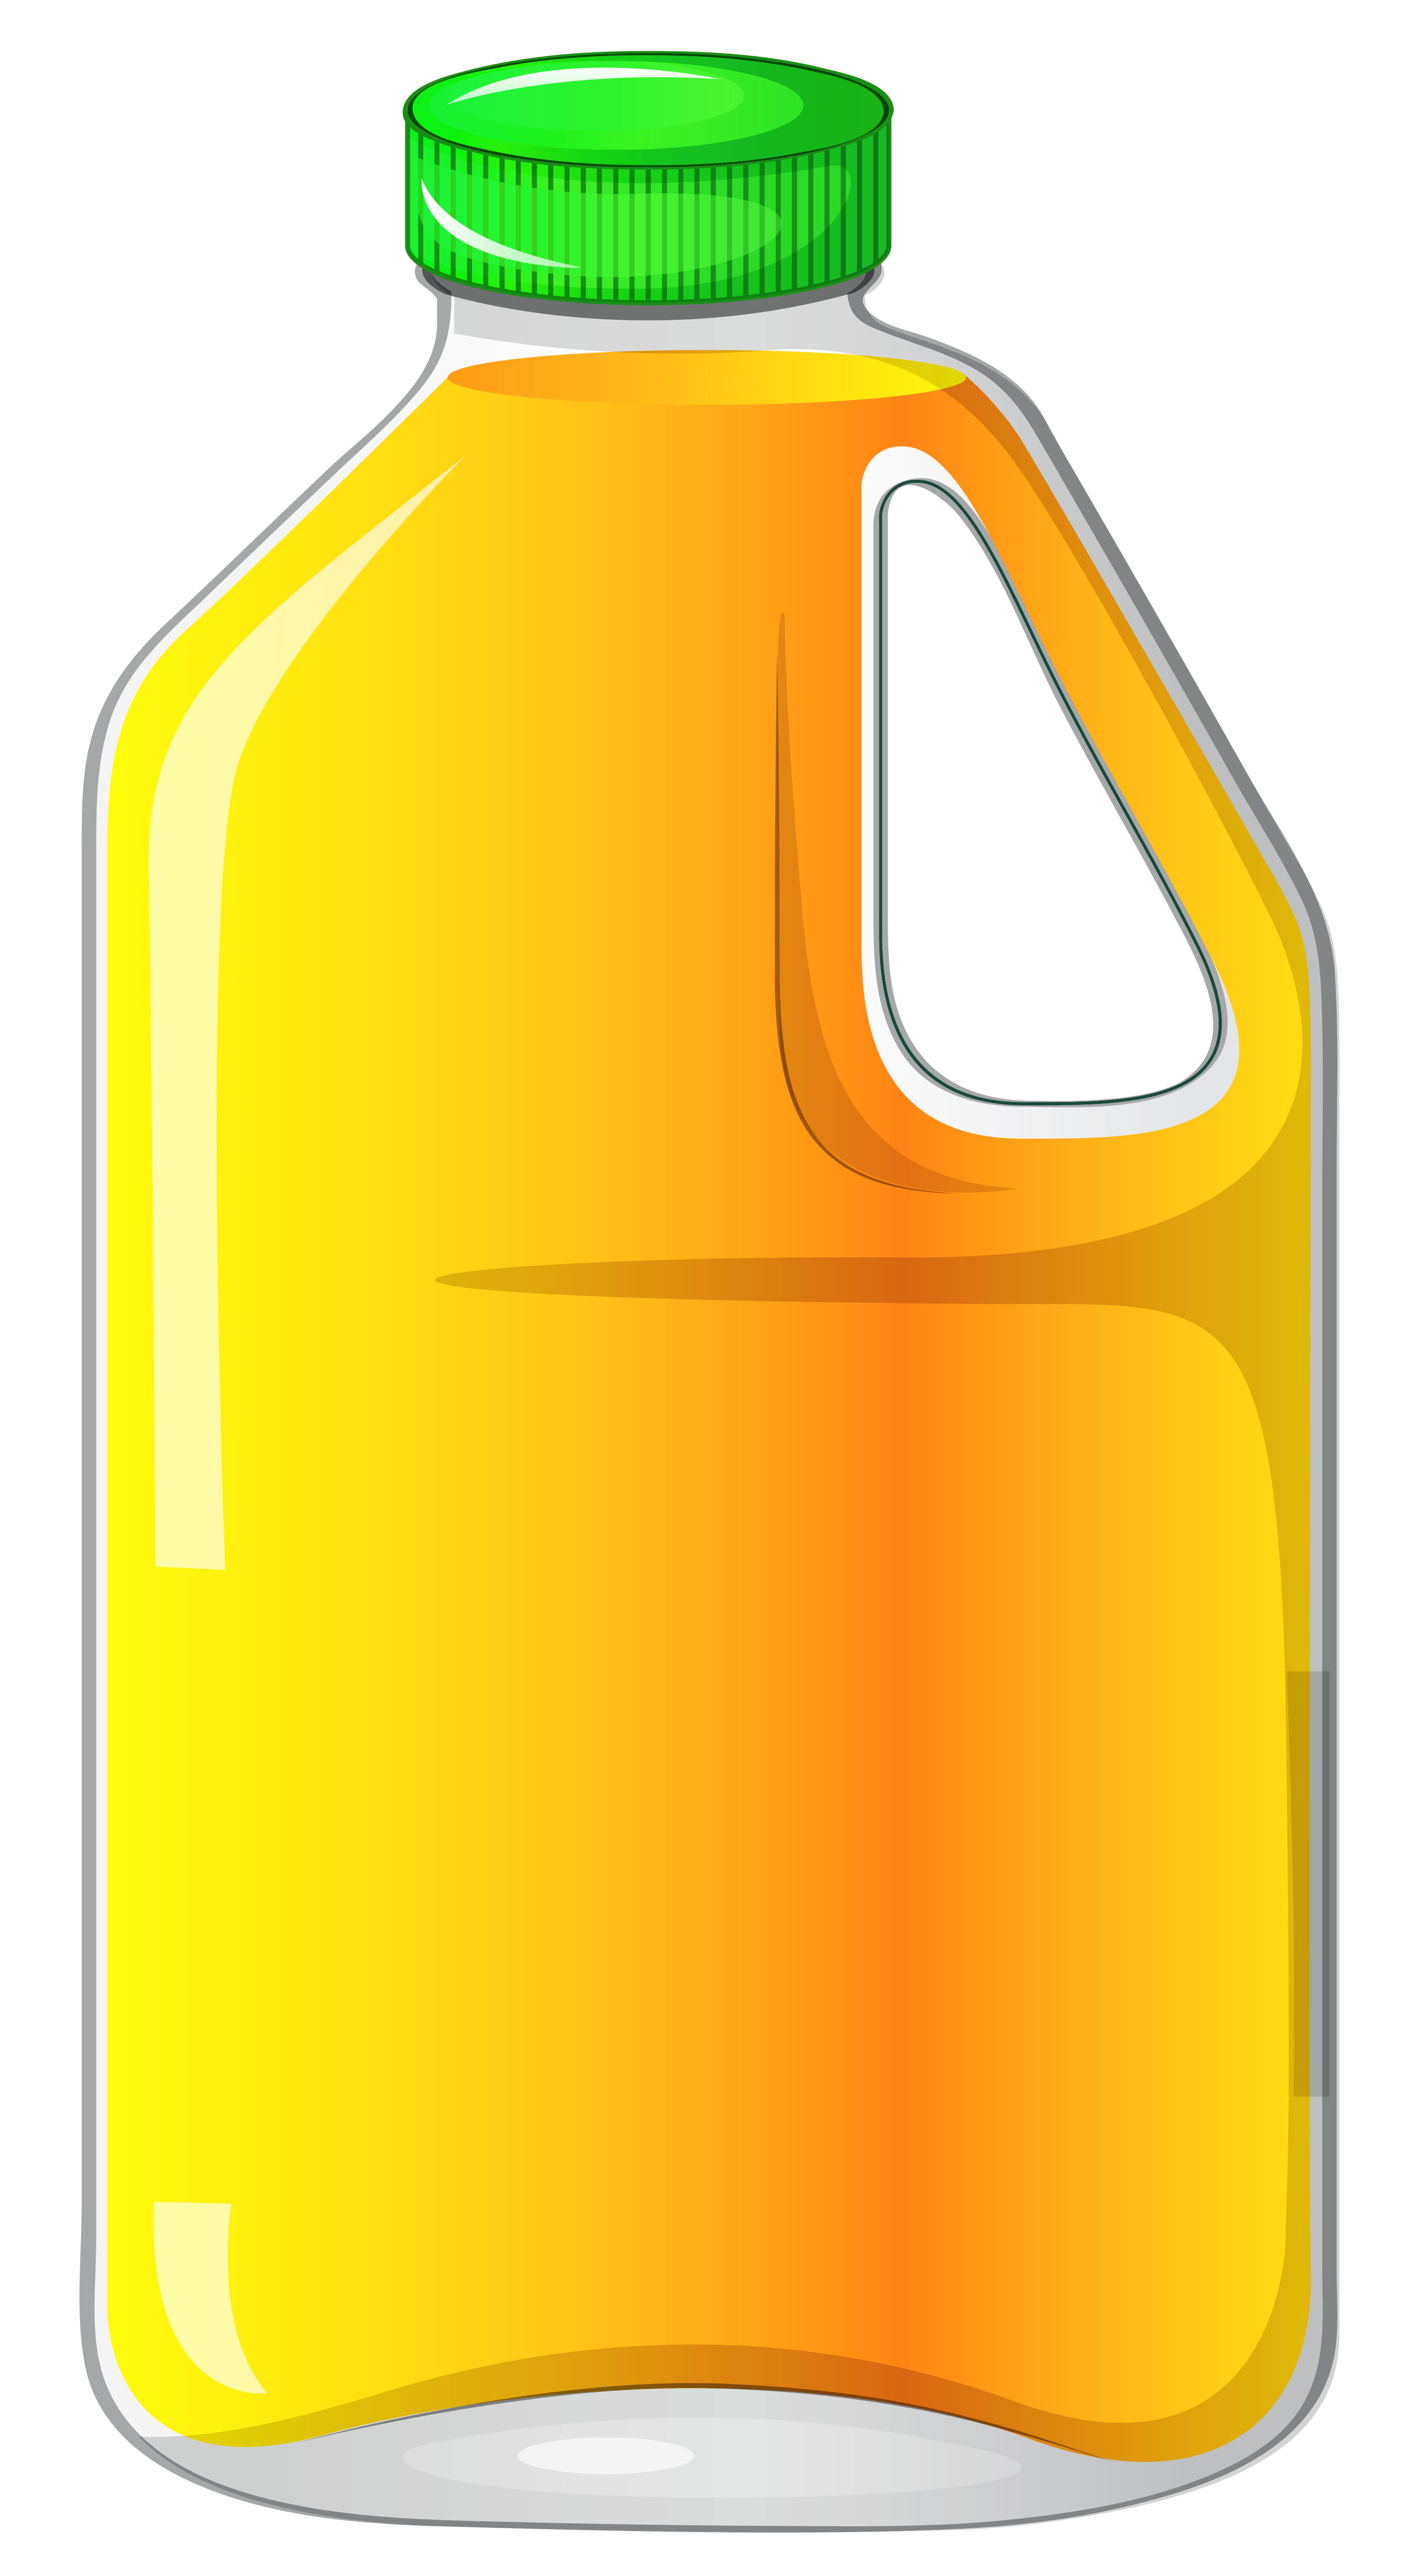 Clipart beach bottle. Large with orange juice